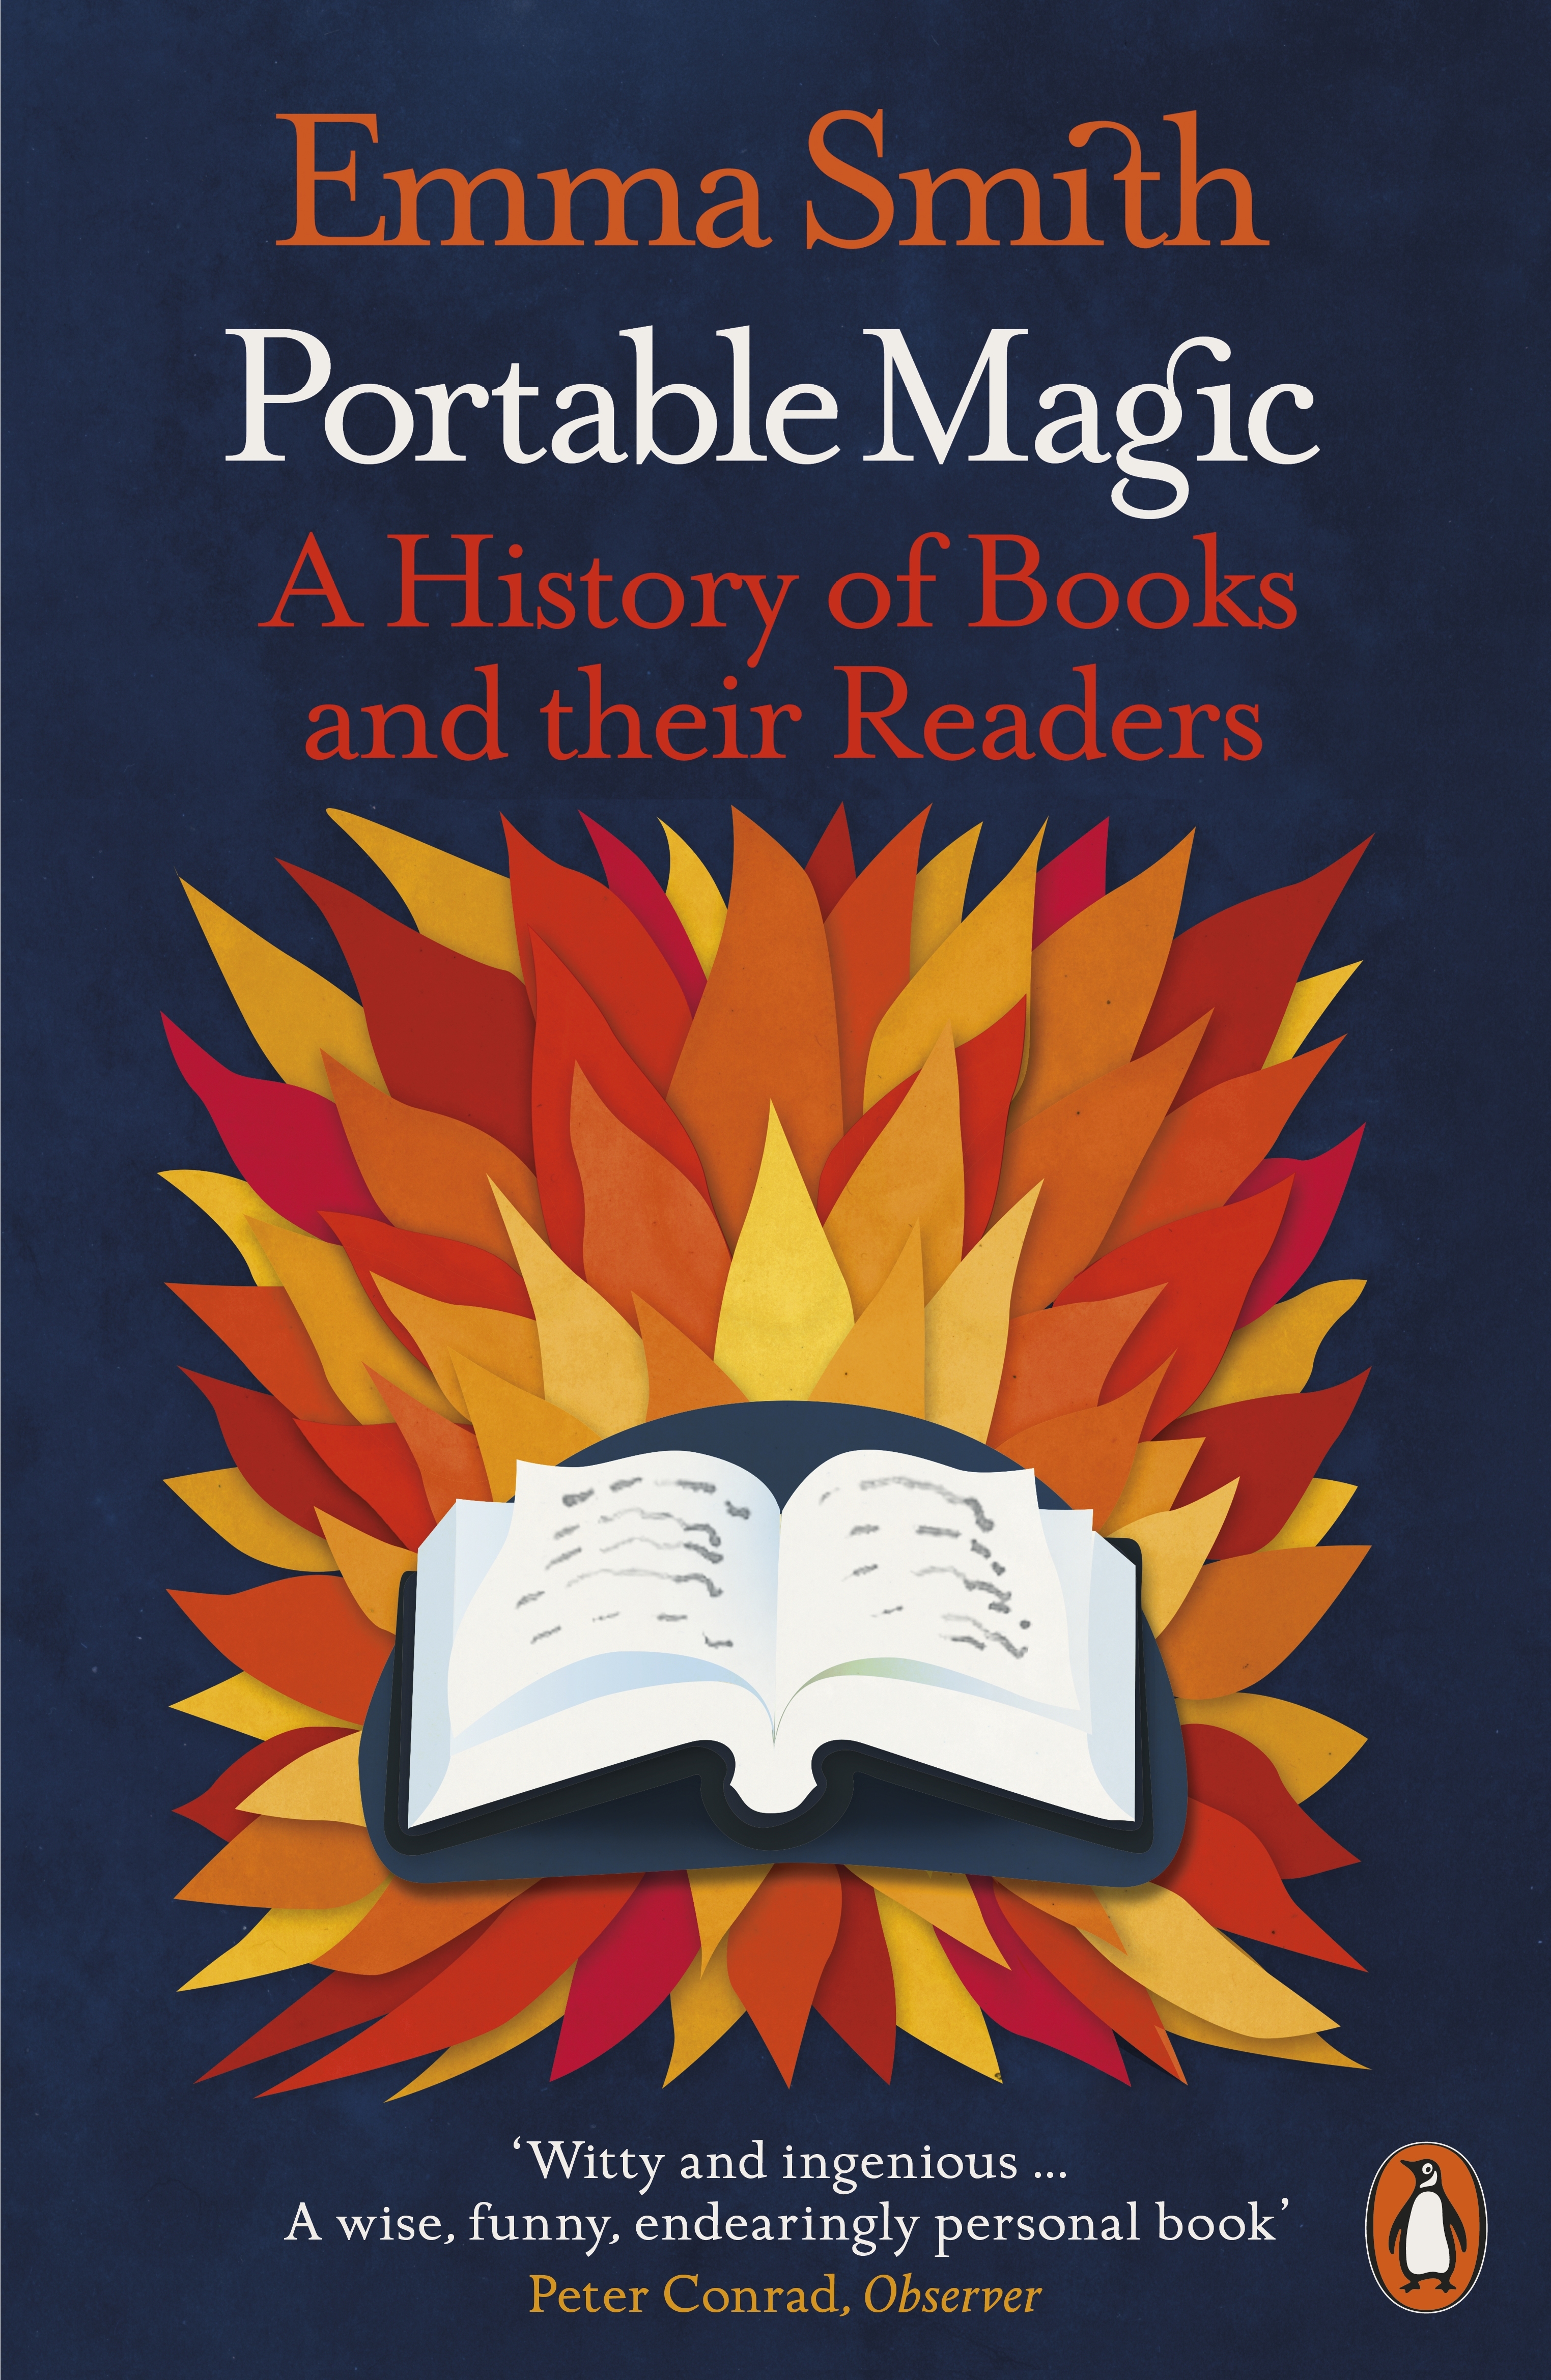 Portable Magic by Emma Smith - Penguin Books Australia